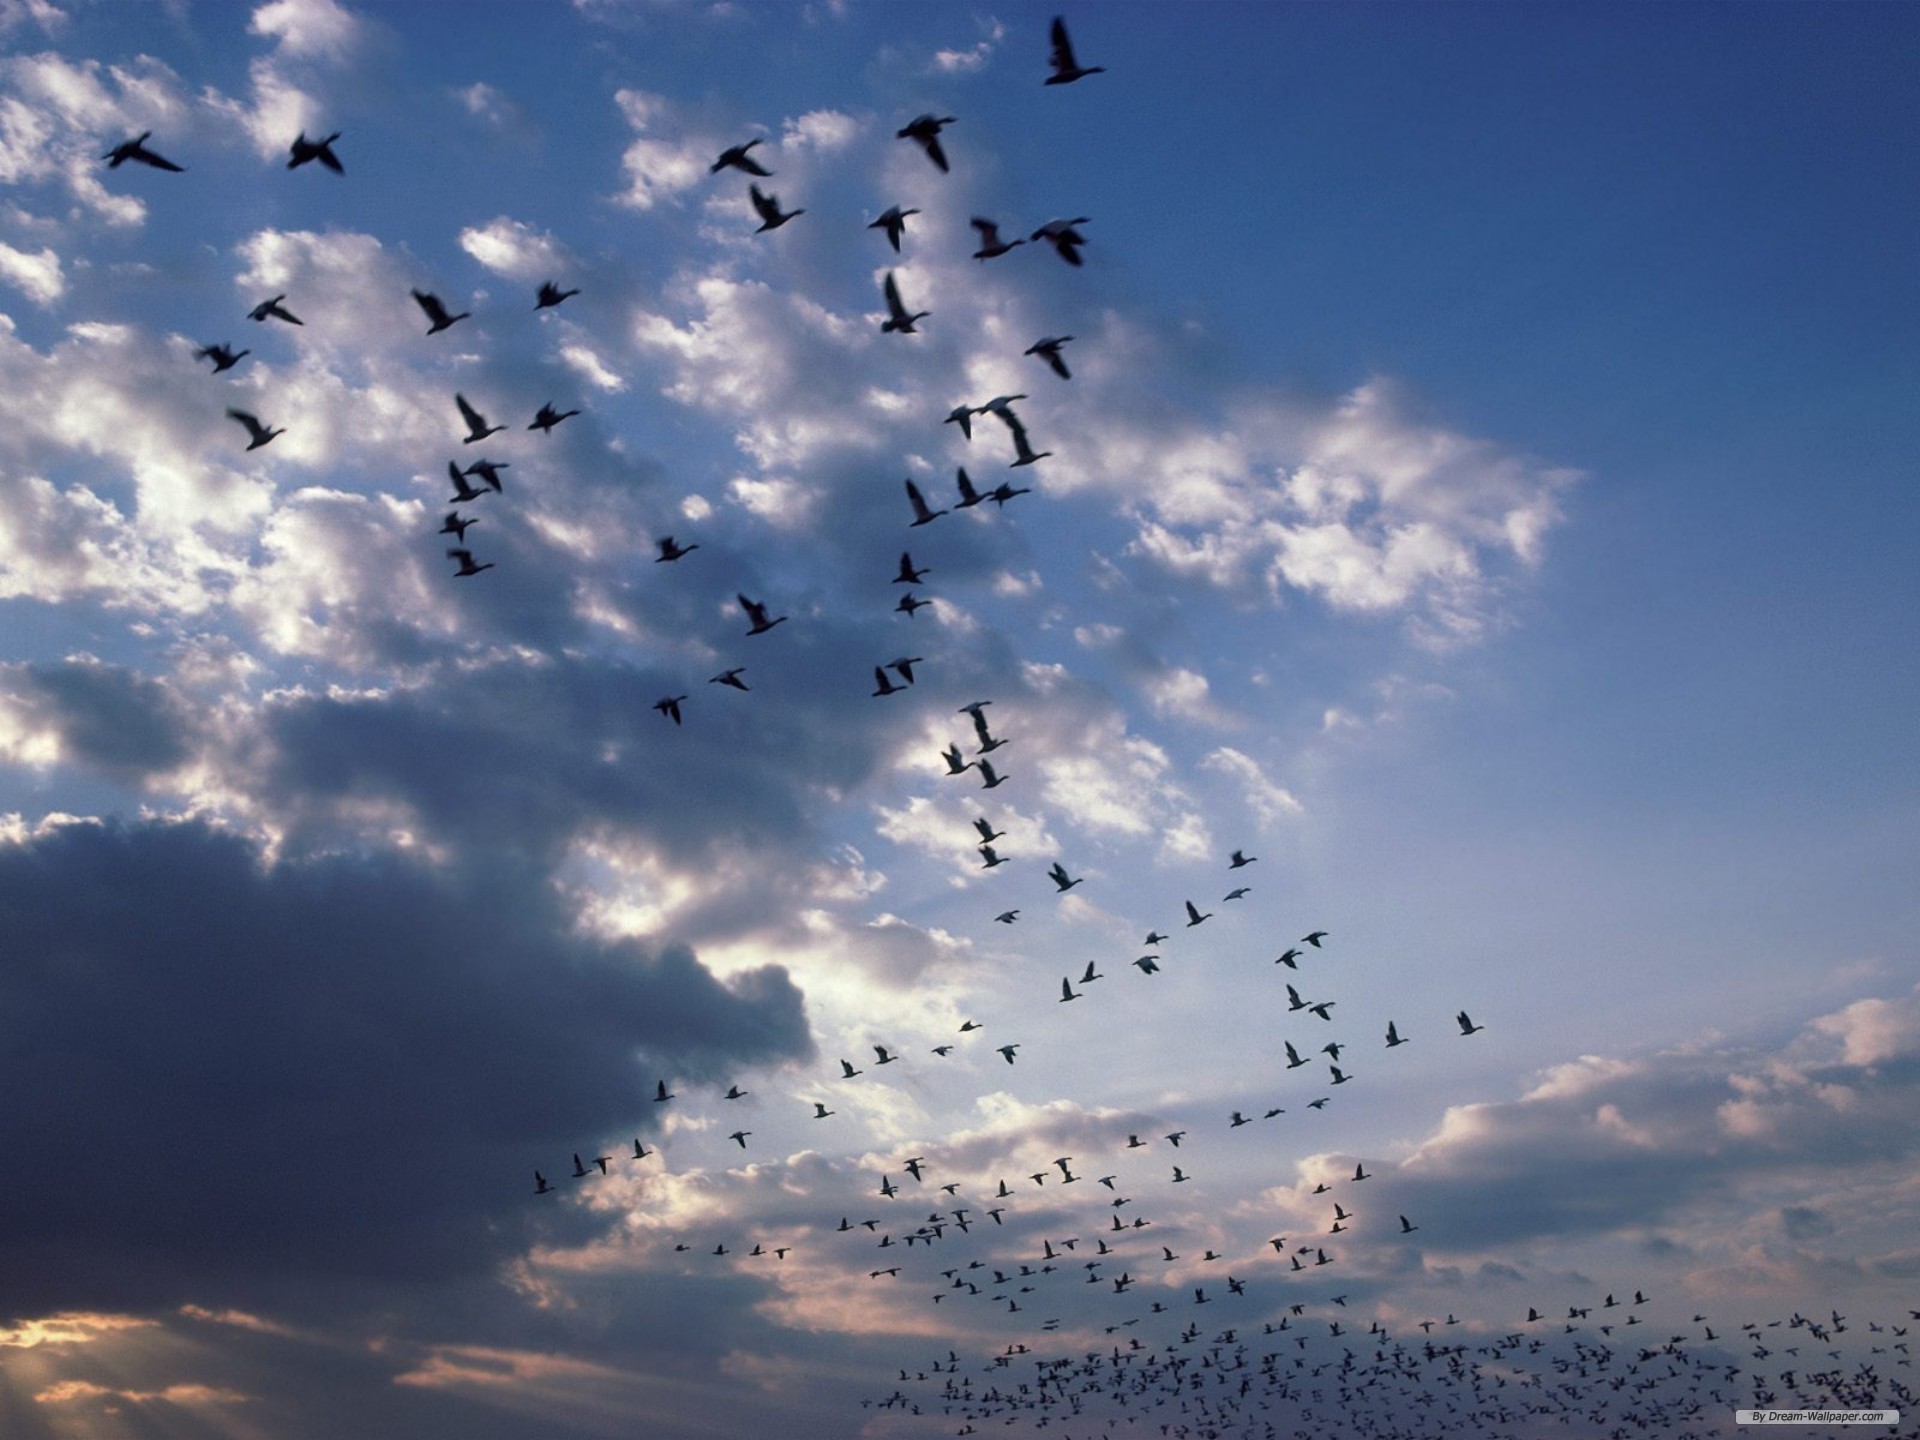 Словно стая птиц. Стая птиц. Птицы в небе. Птицы улетают. Стая птиц в небе.